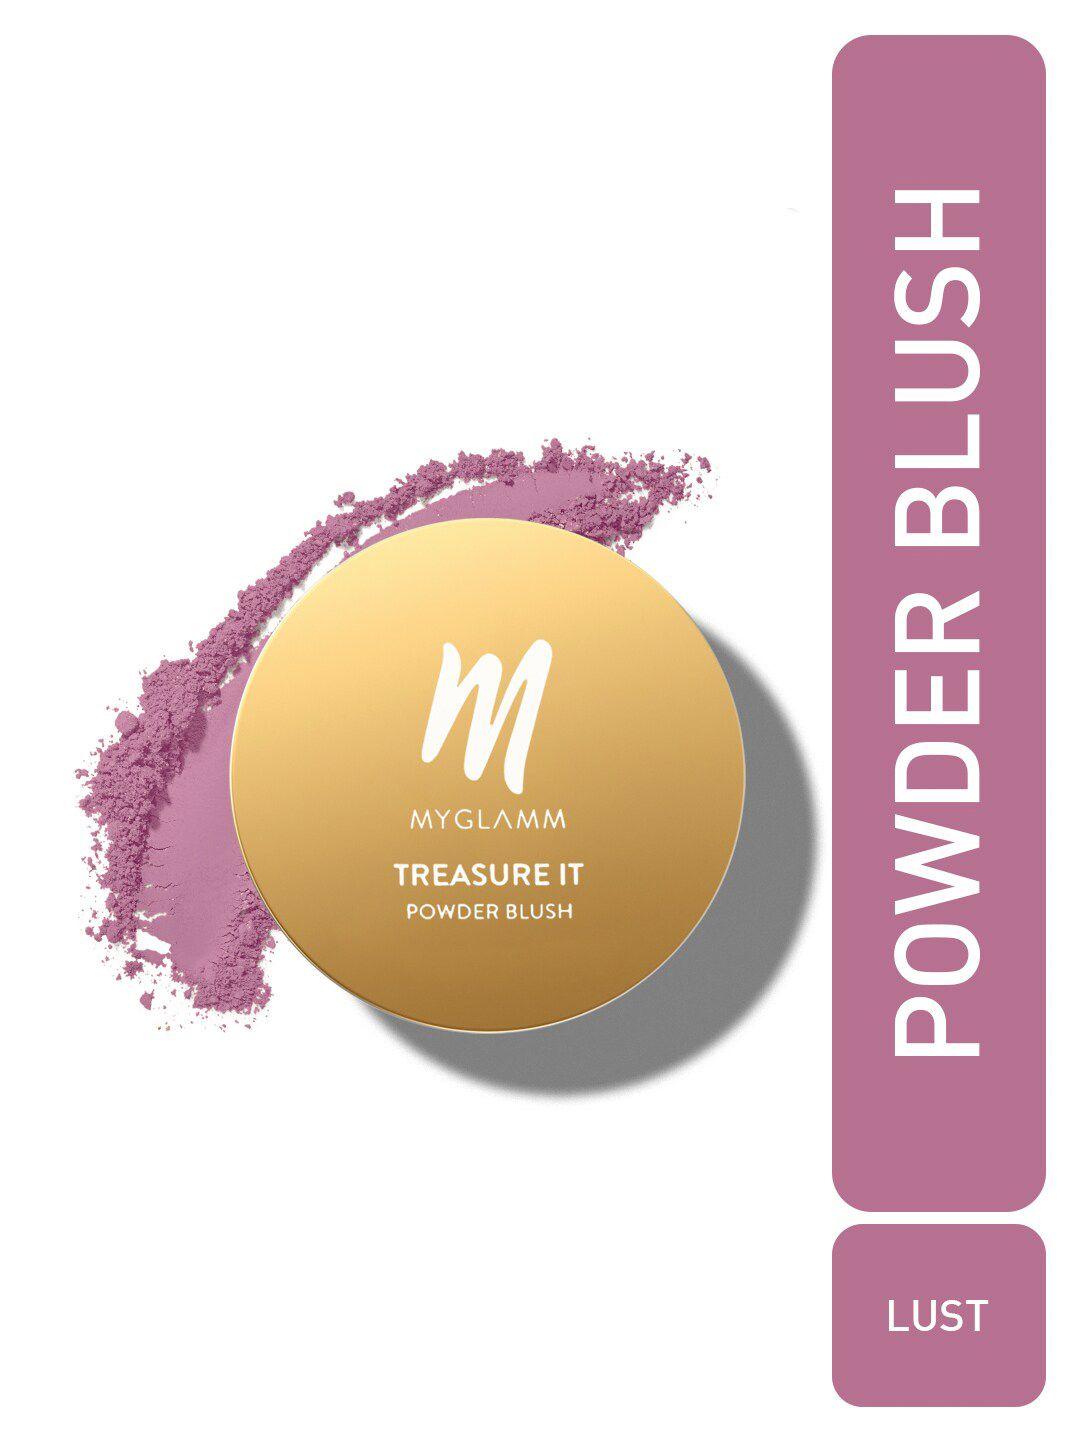 myglamm treasure it powder matte blush - 4g - lust